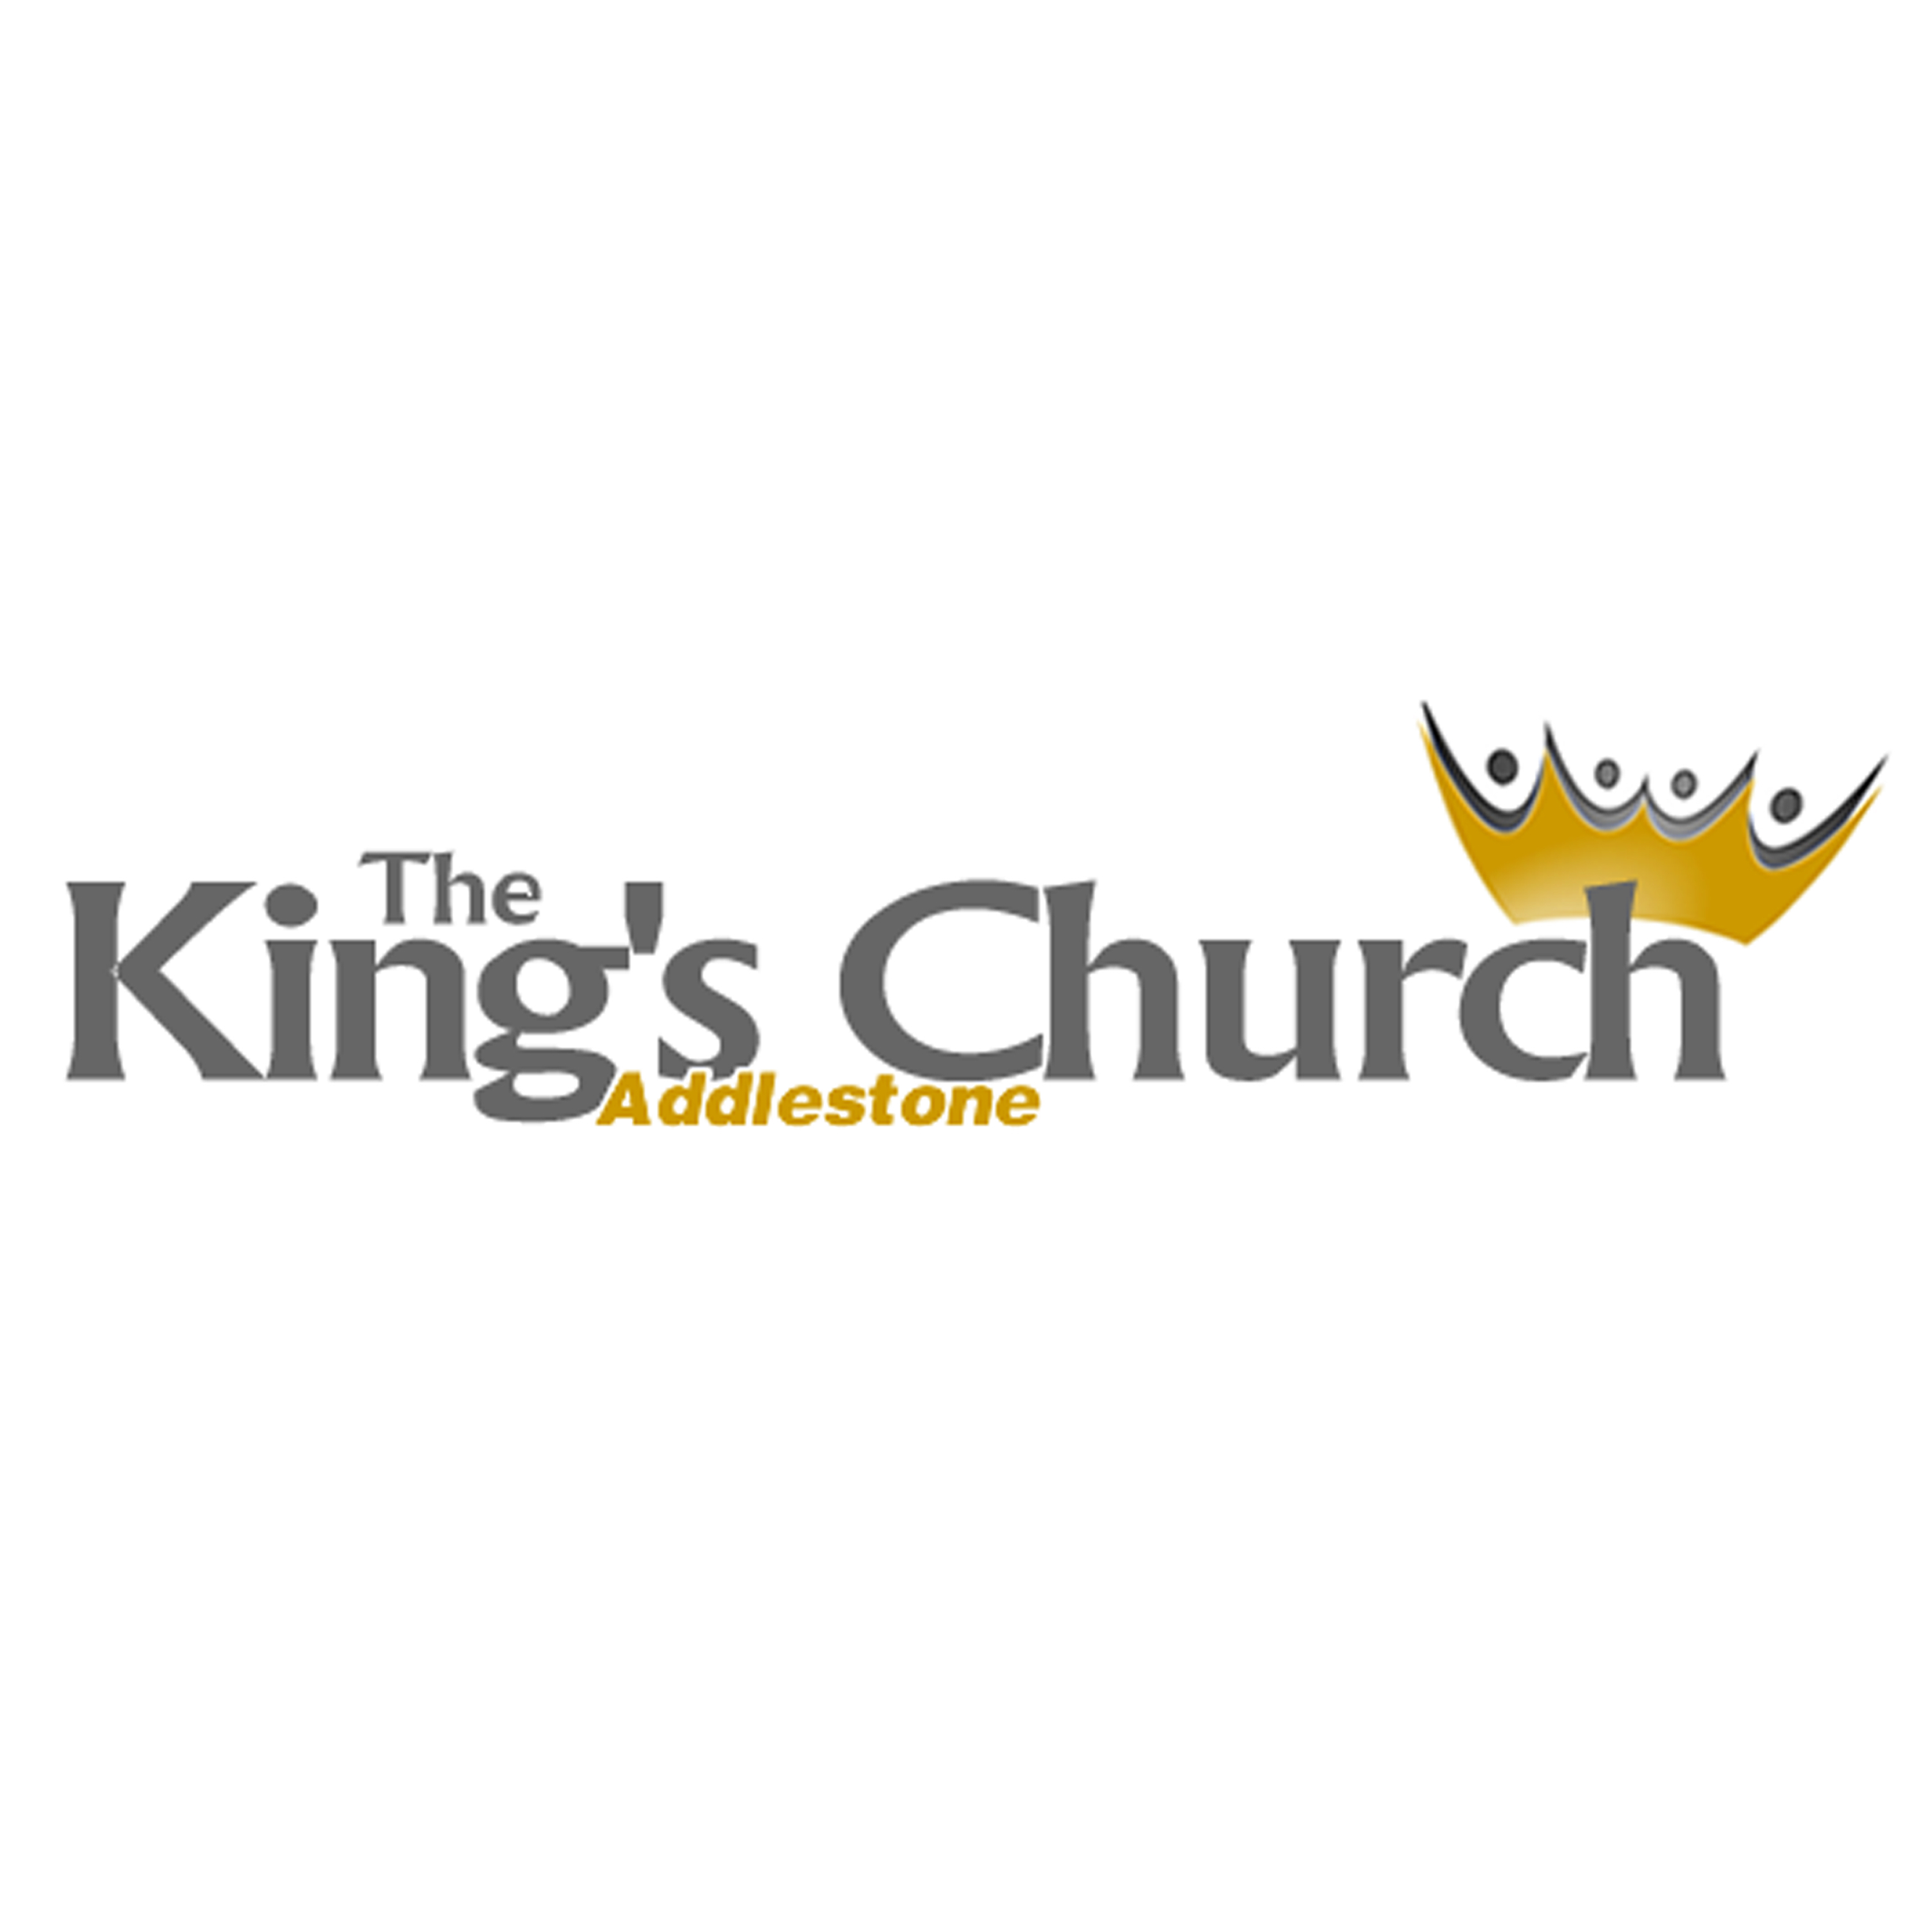 The King's Church, Addlestone